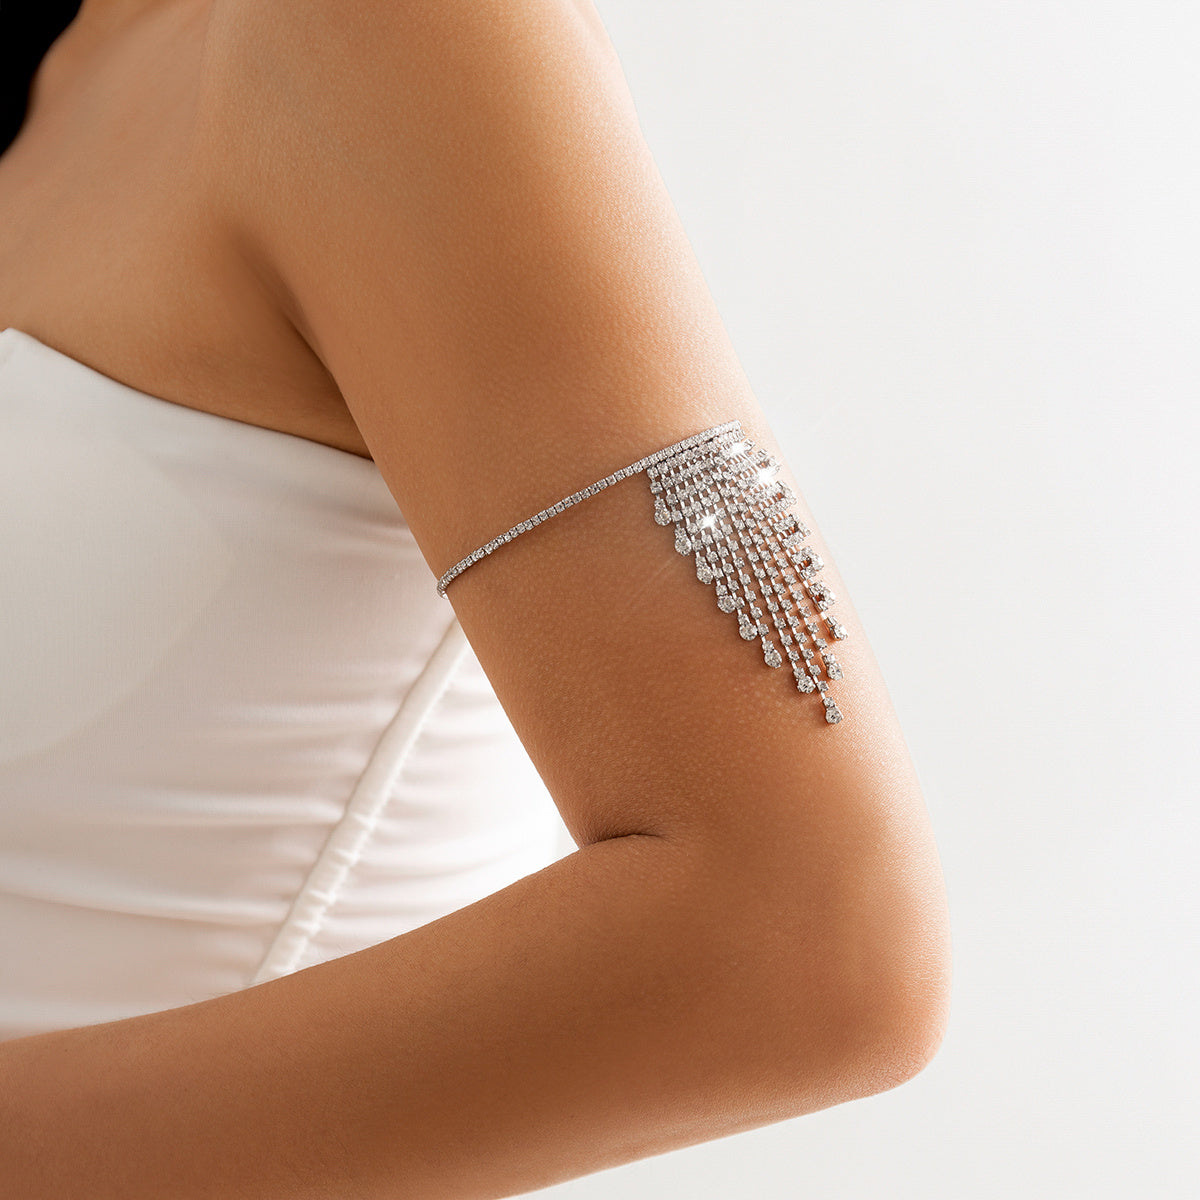 Sparkling Rhinestone Tassel Arm Bracelet - Adjustable Open Cuff Jewelry for a Sweet Look